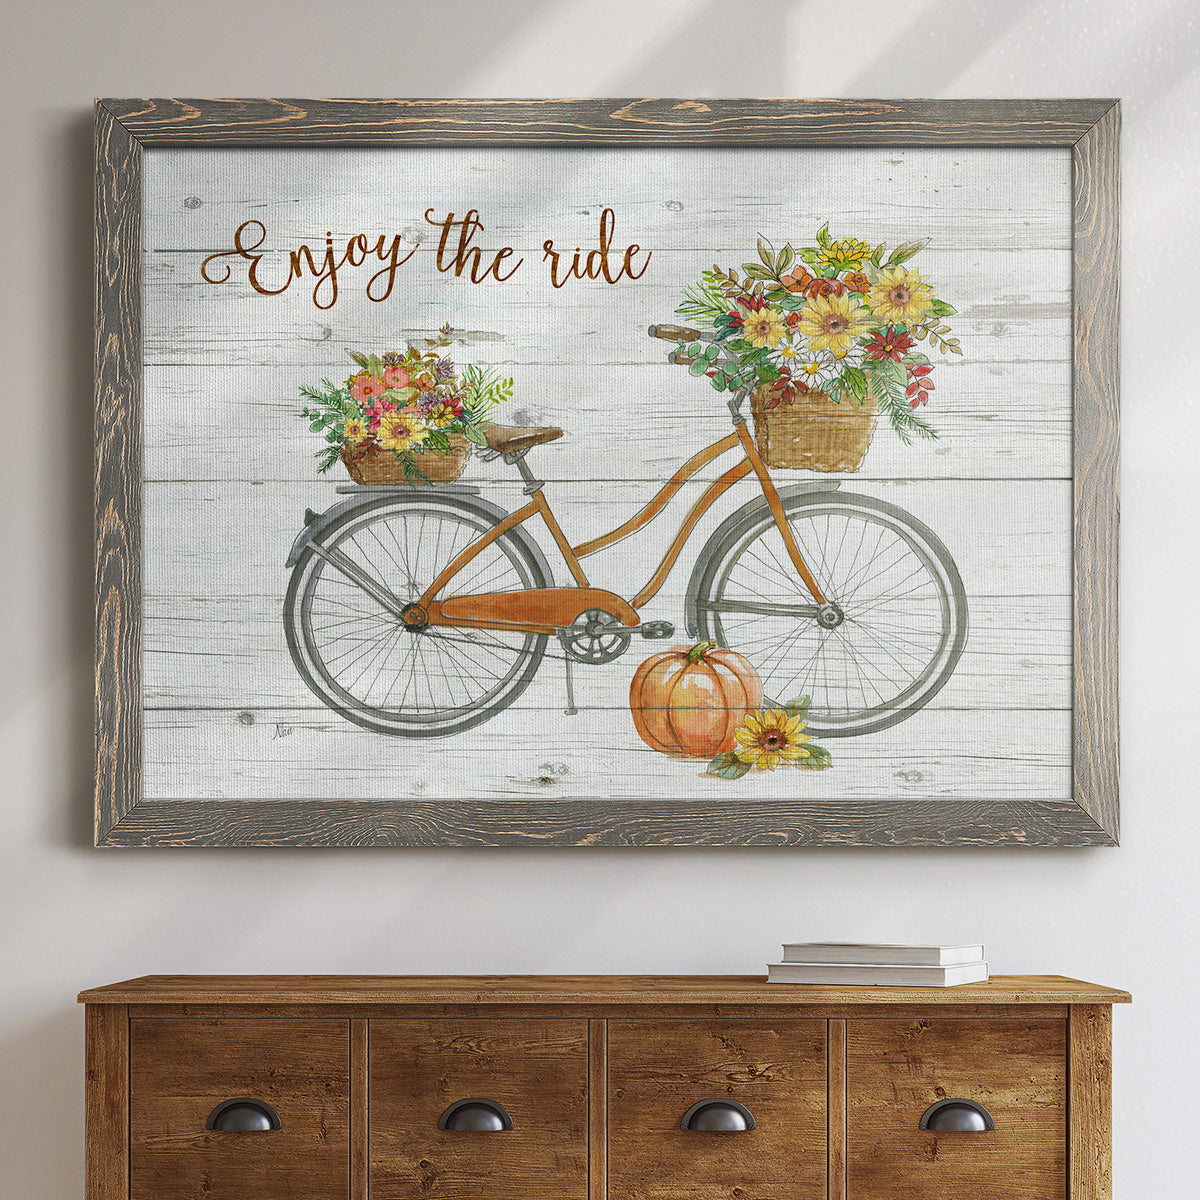 Harvest Bike-Premium Framed Canvas - Ready to Hang